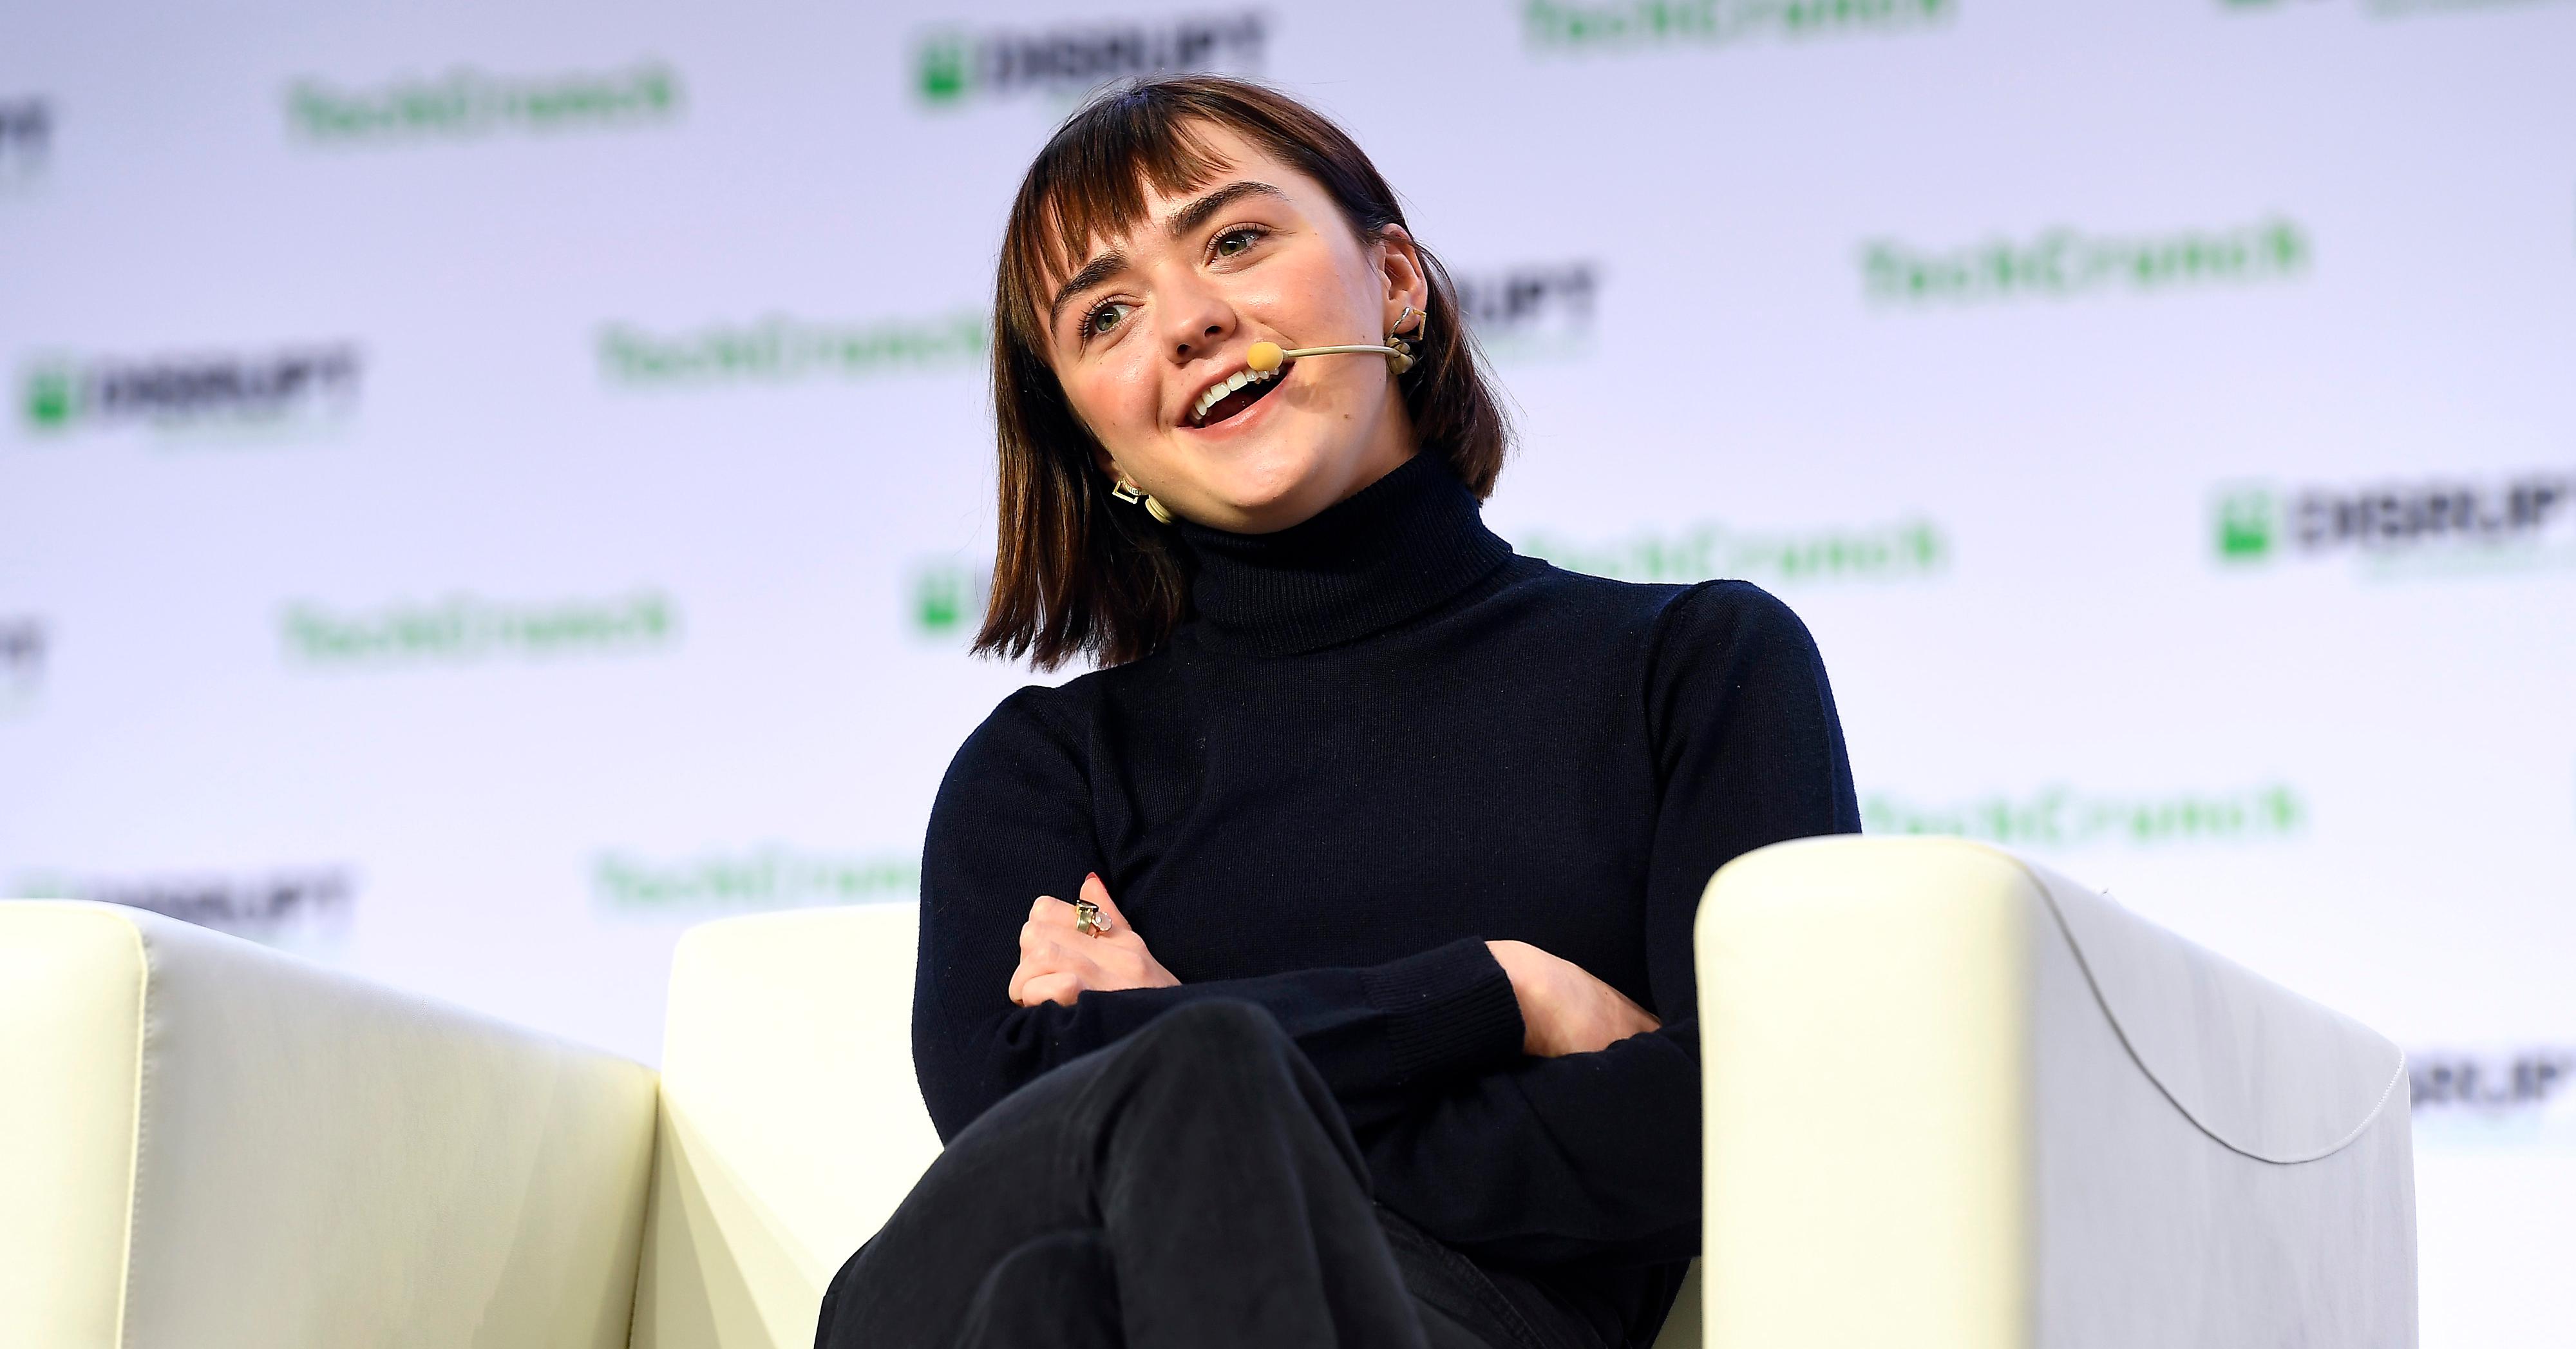 Maisie Williams' startup Daisie is preparing for new partnerships